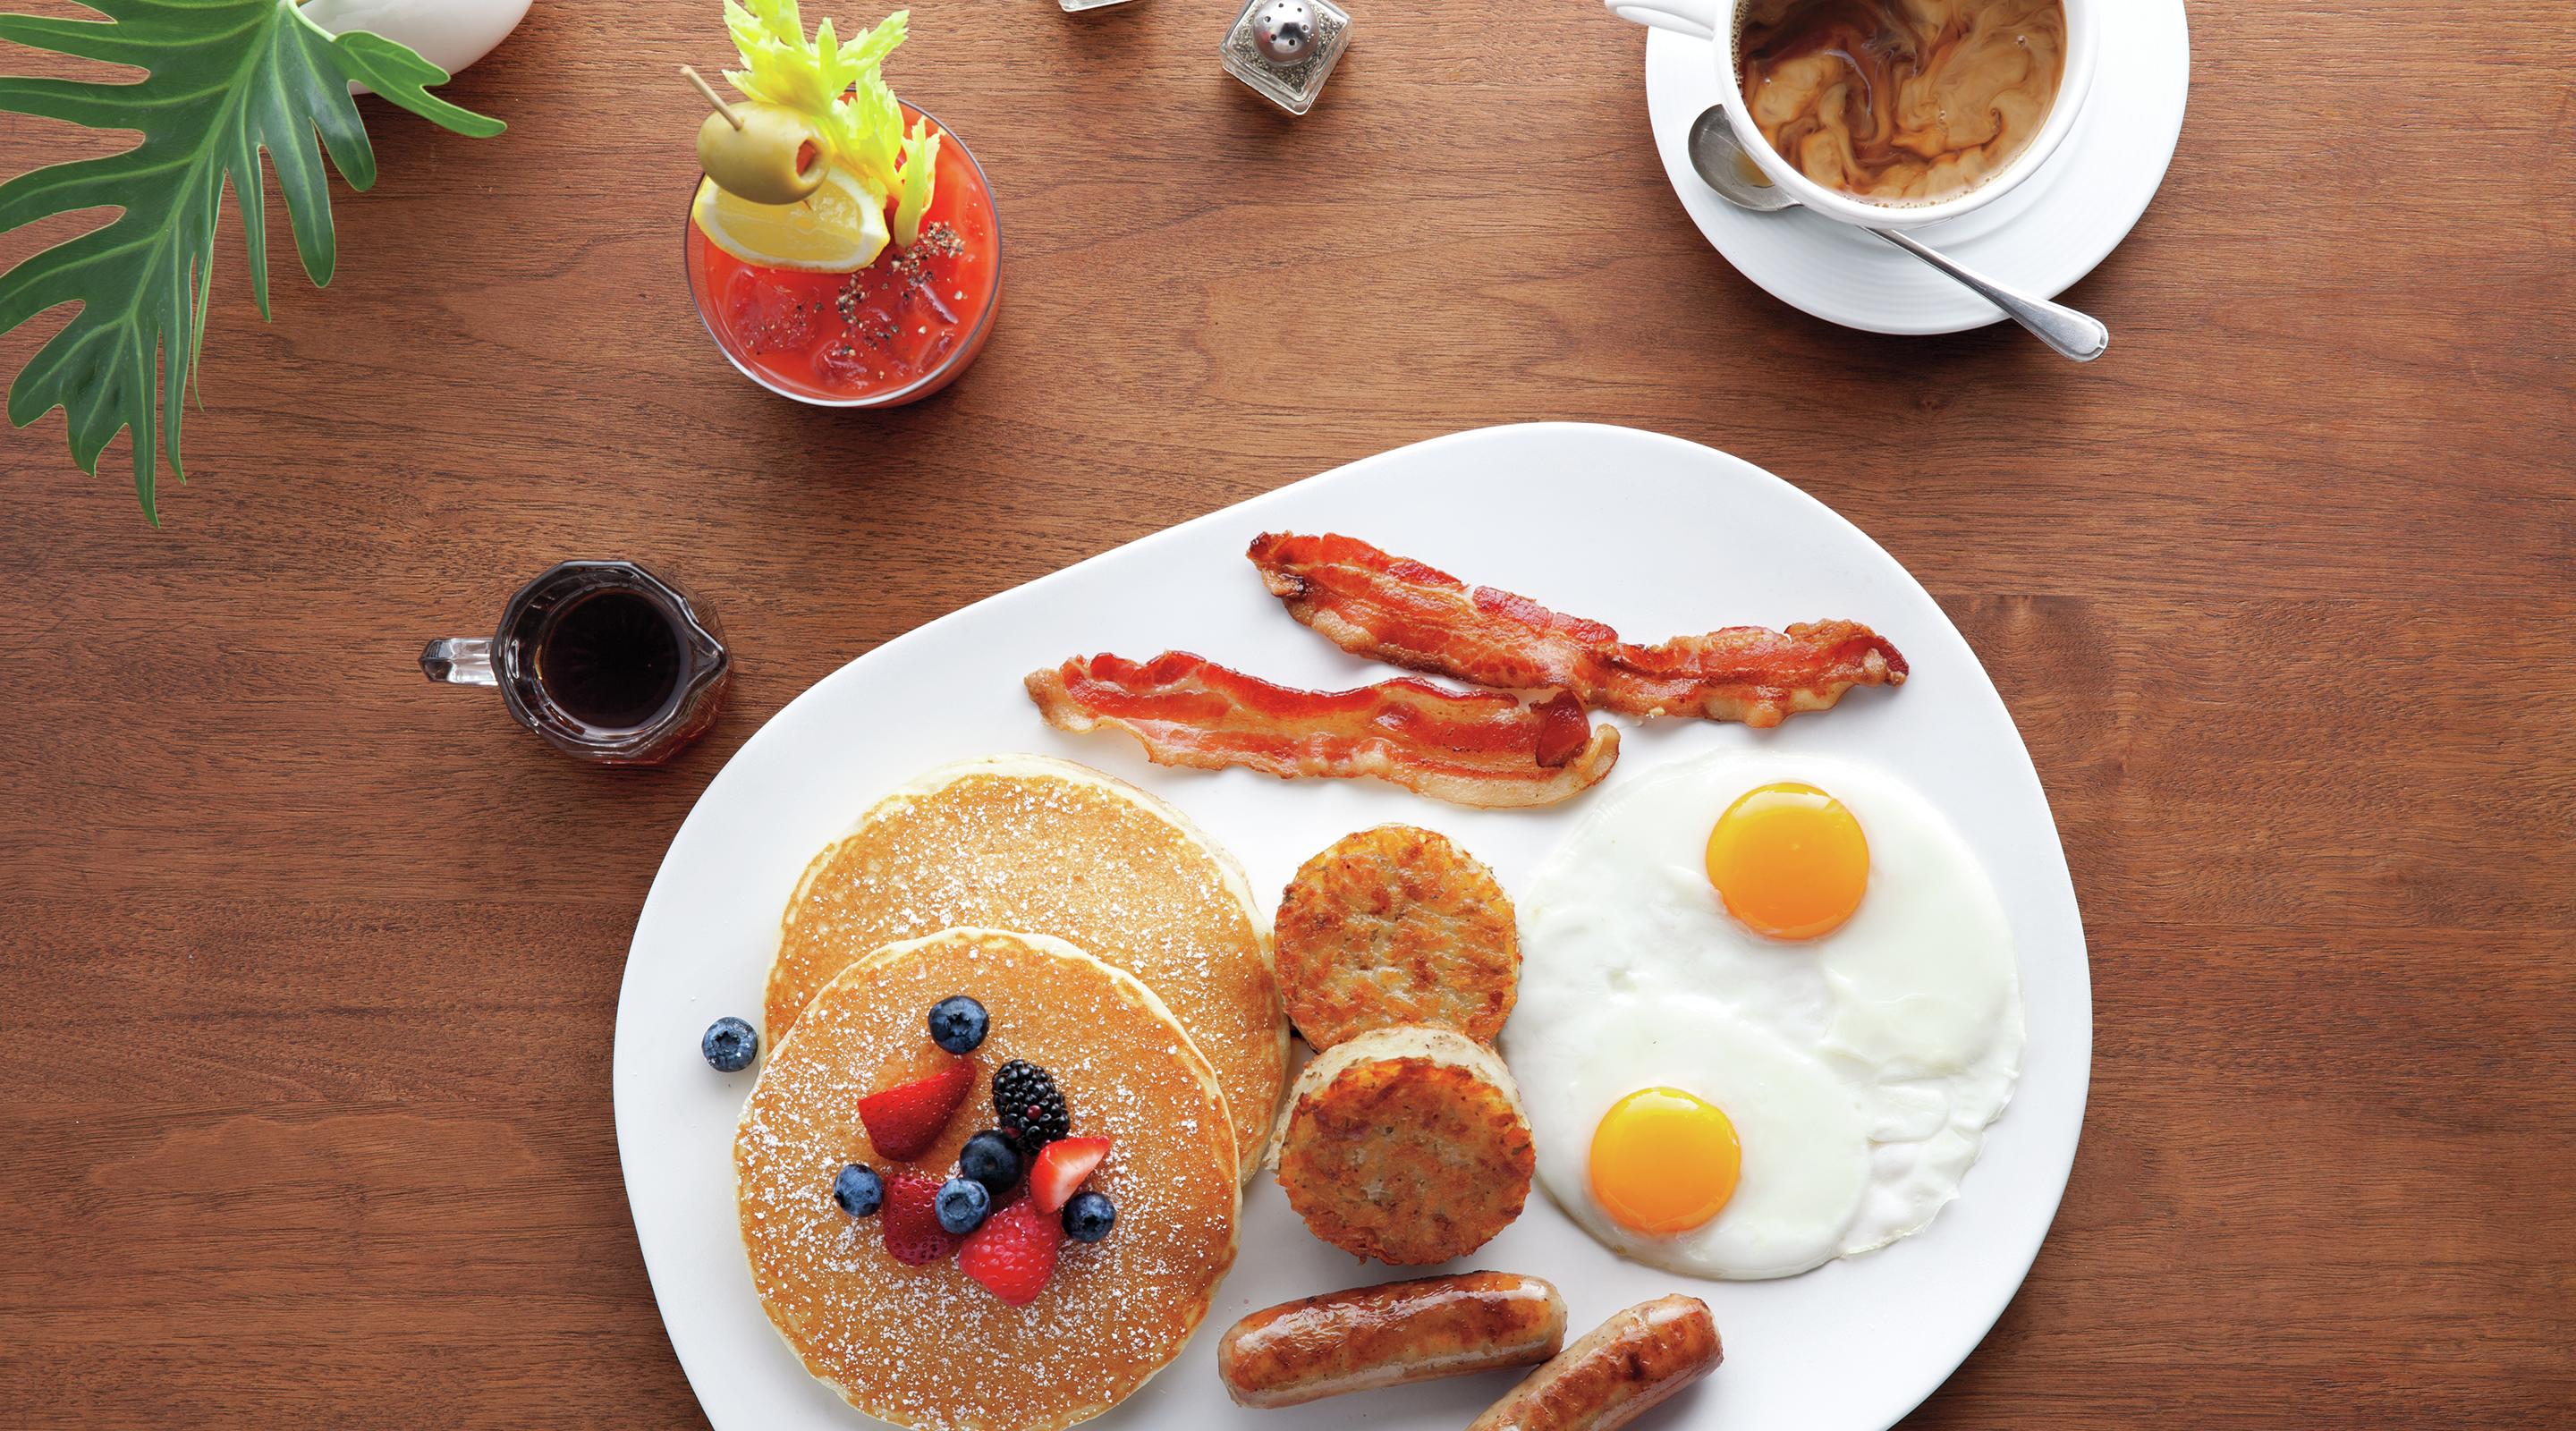 American Breakfast price &amp; reviews from 78 Restaurants